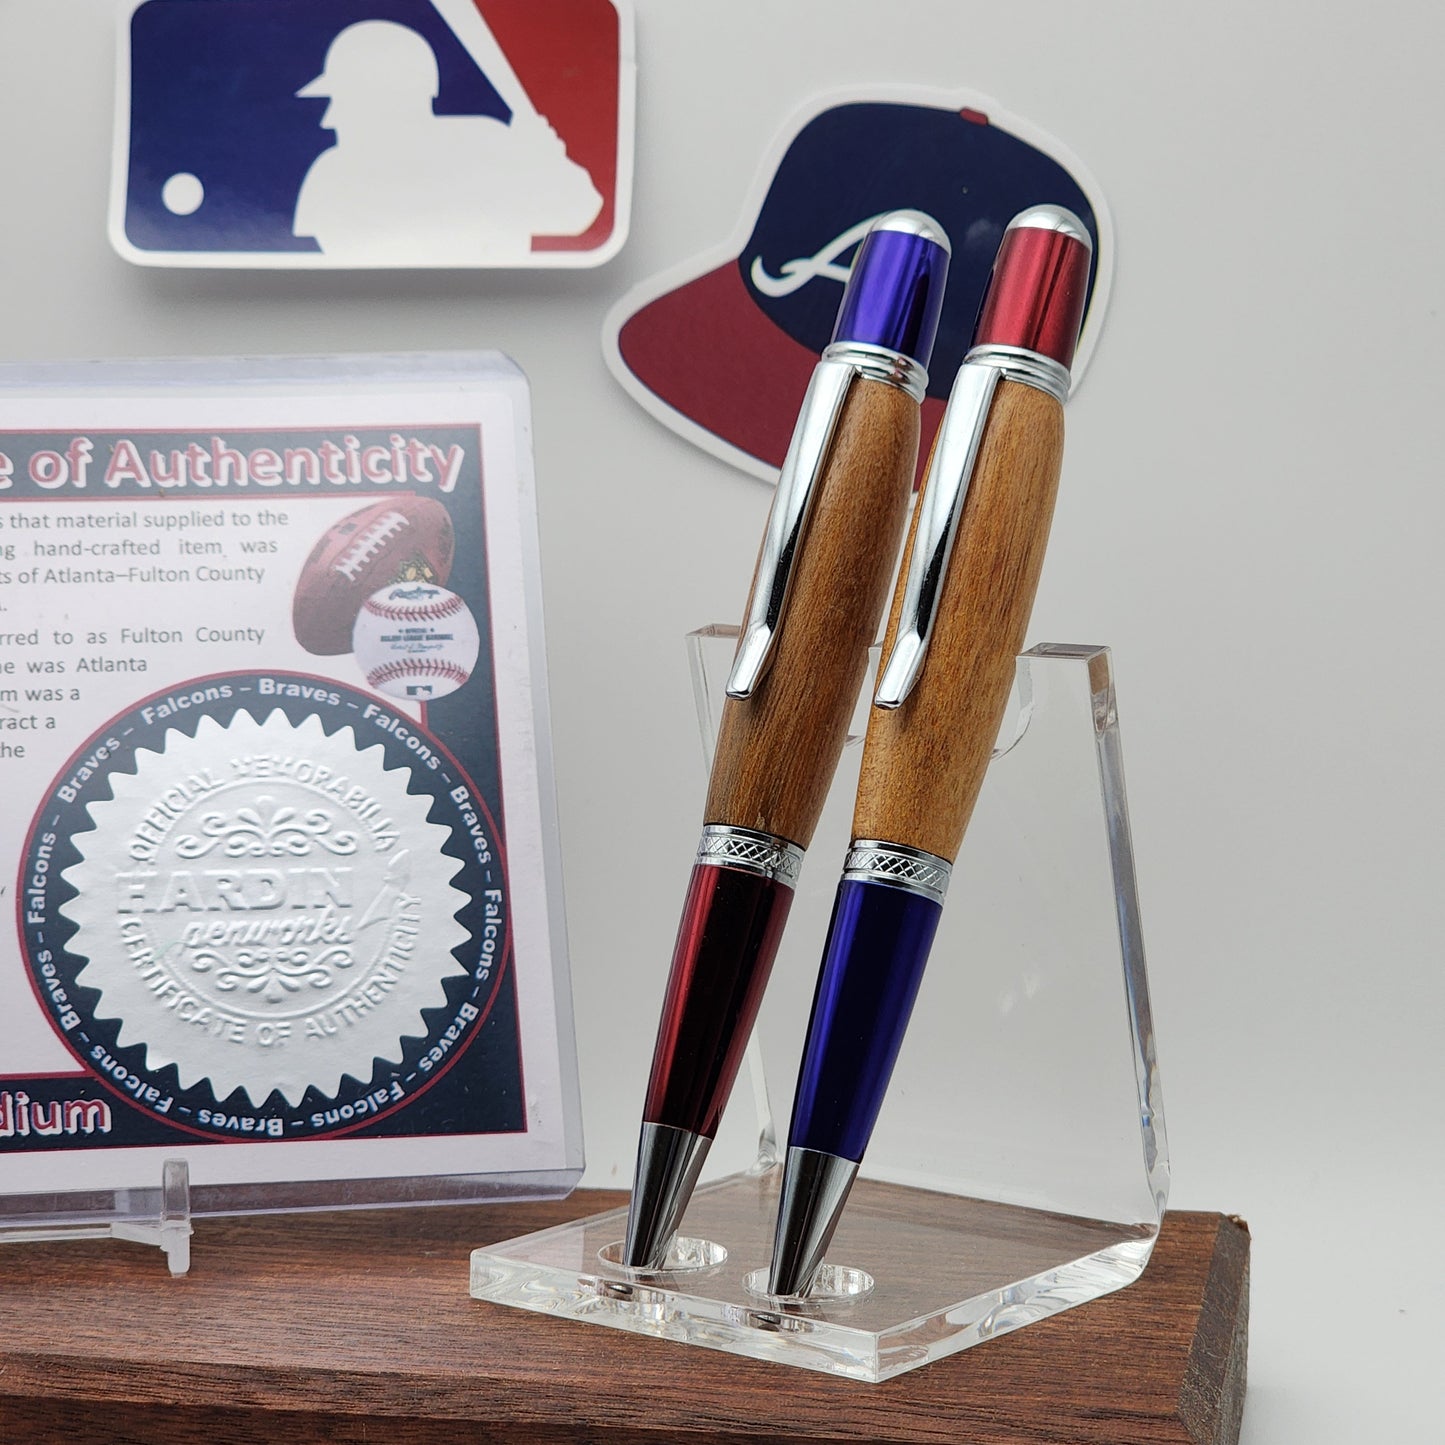 Atlanta Braves Pen (AFC) | Atlanta-Fulton County Stadium Souvenir Pen | Baseball | Collectible | MLB | Handcrafted Pen | Braves Fan Gift